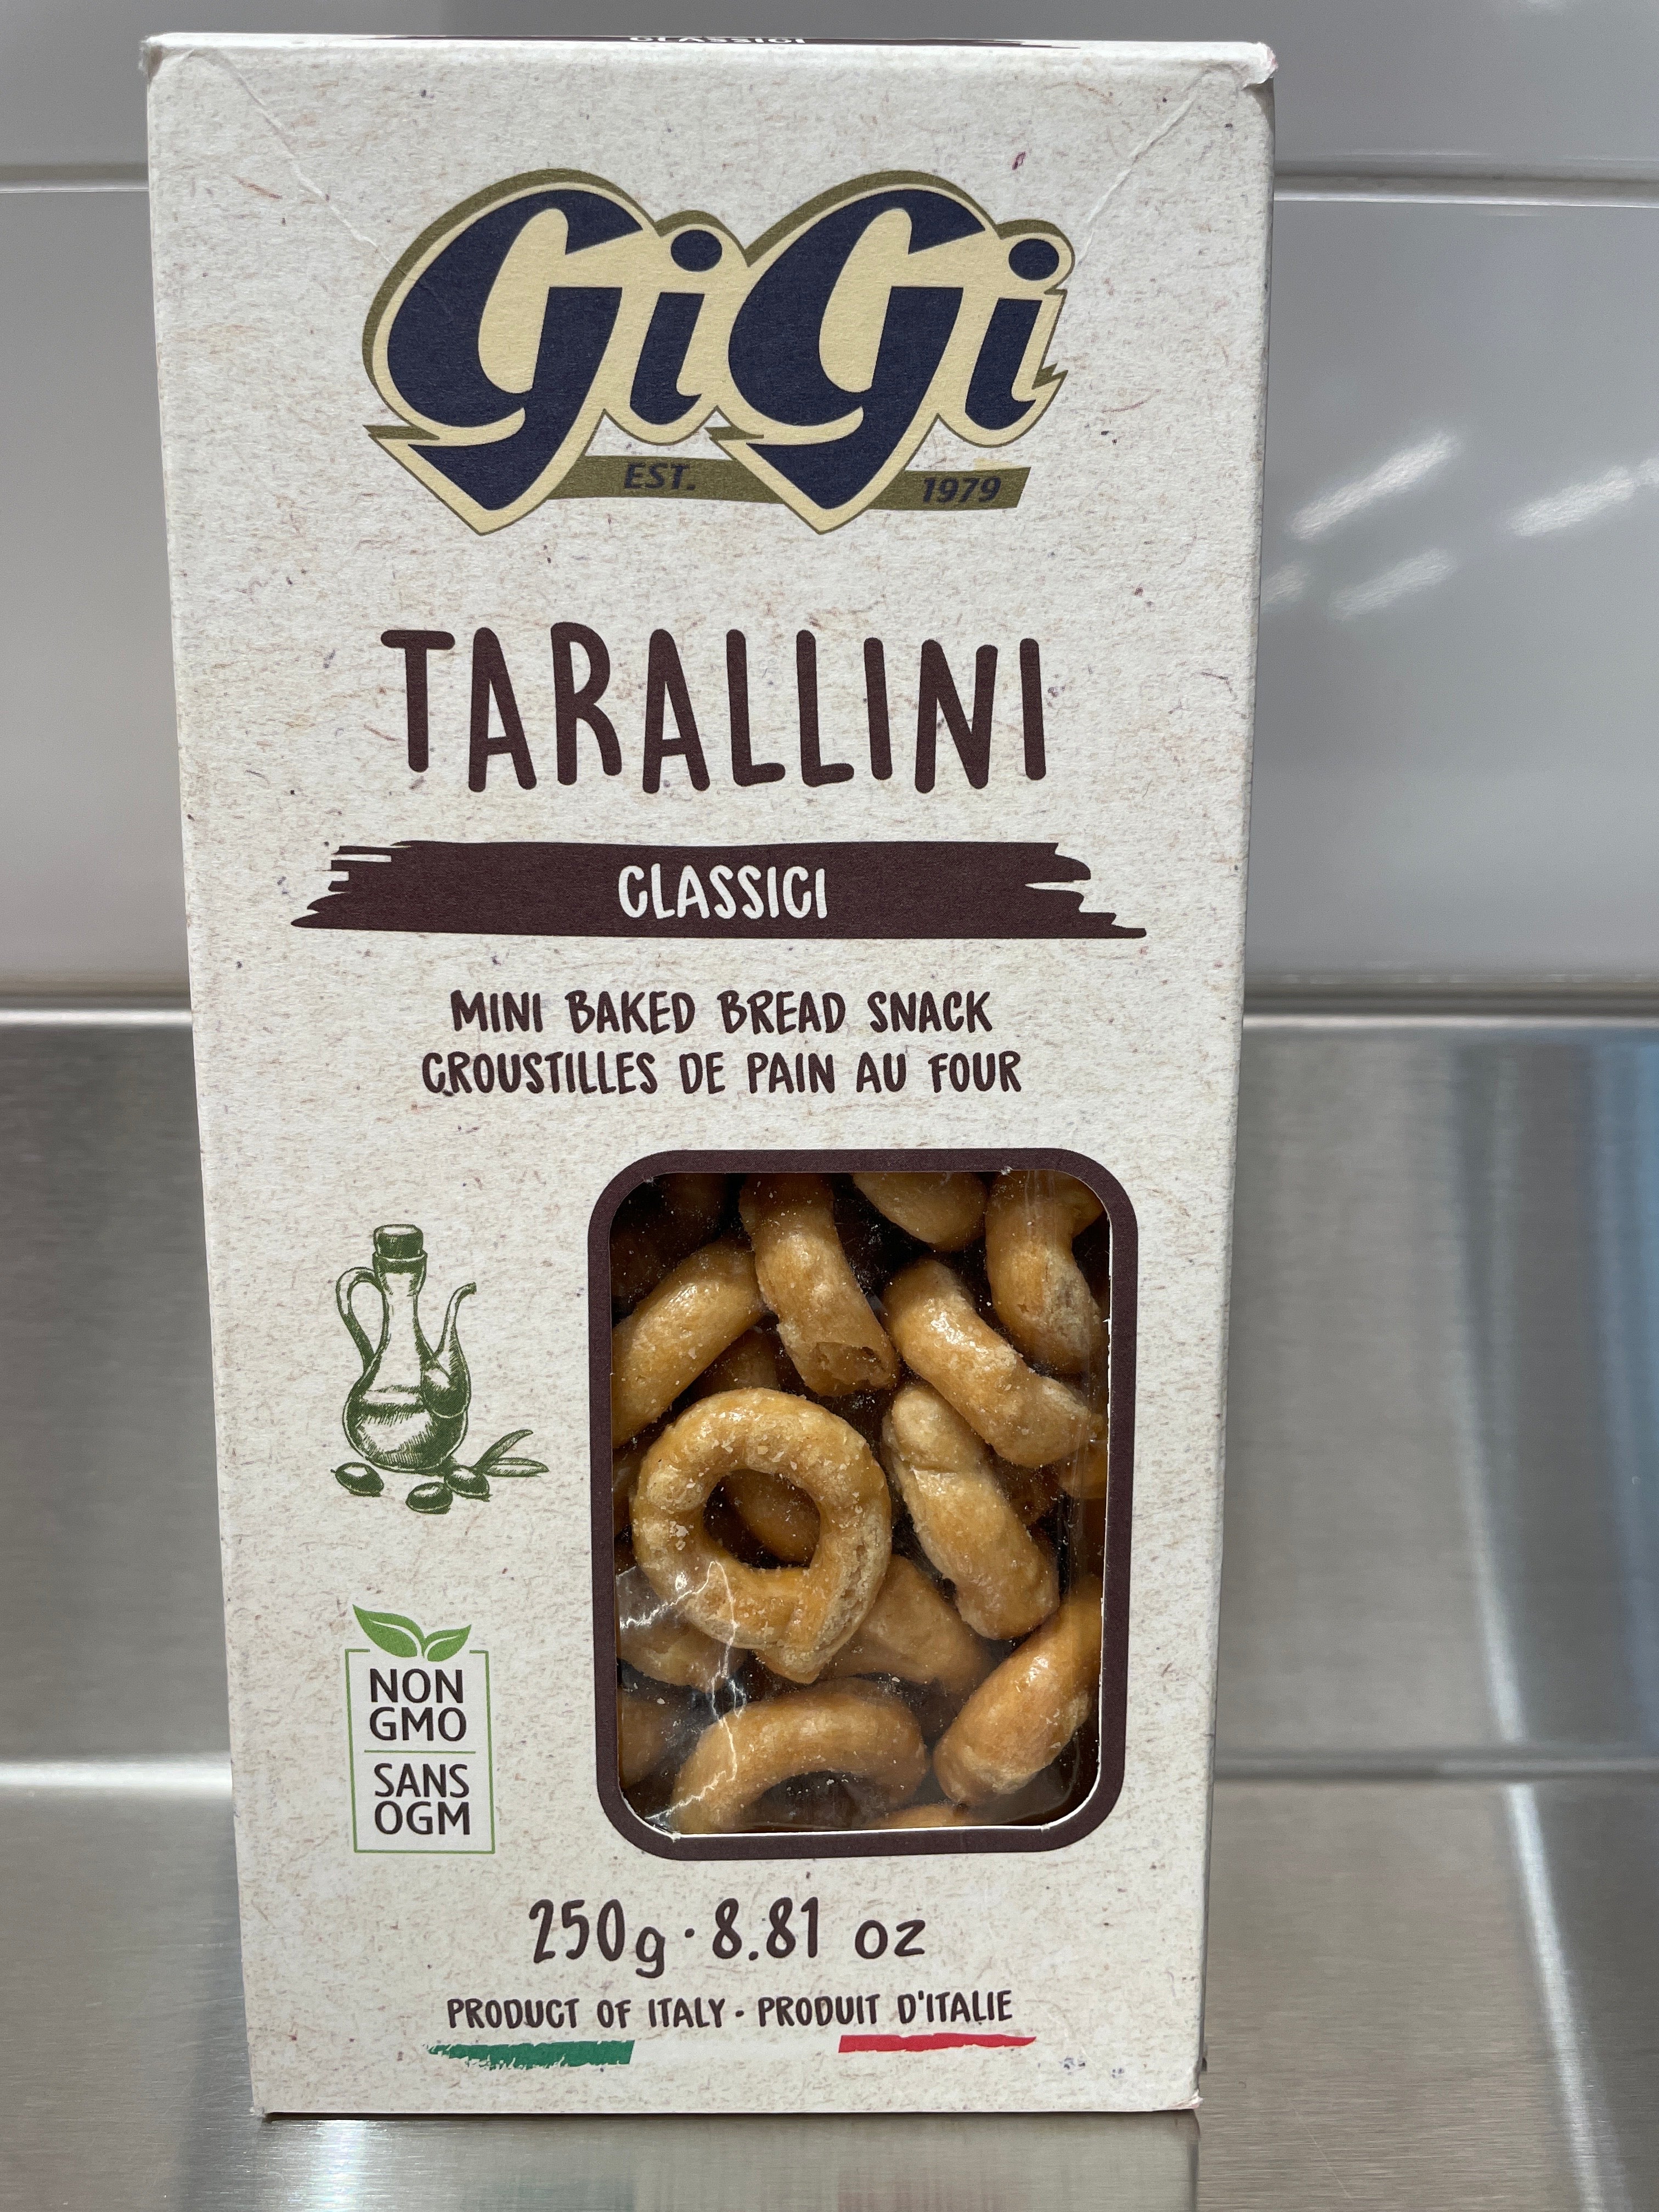 Gigi Tarallini Classic